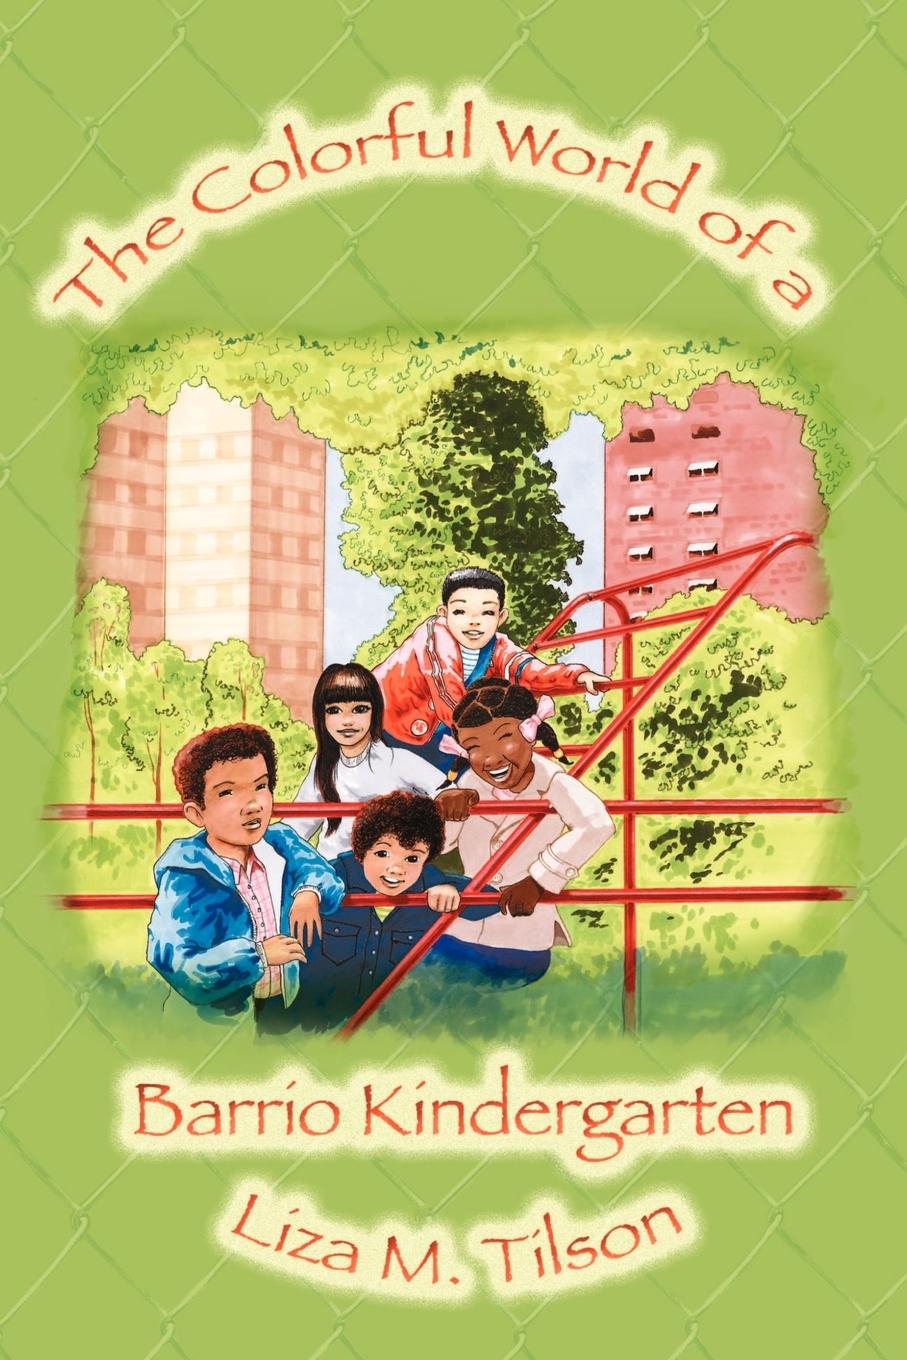 The Colorful World of a Barrio Kindergarten - Tilson, Liza M.